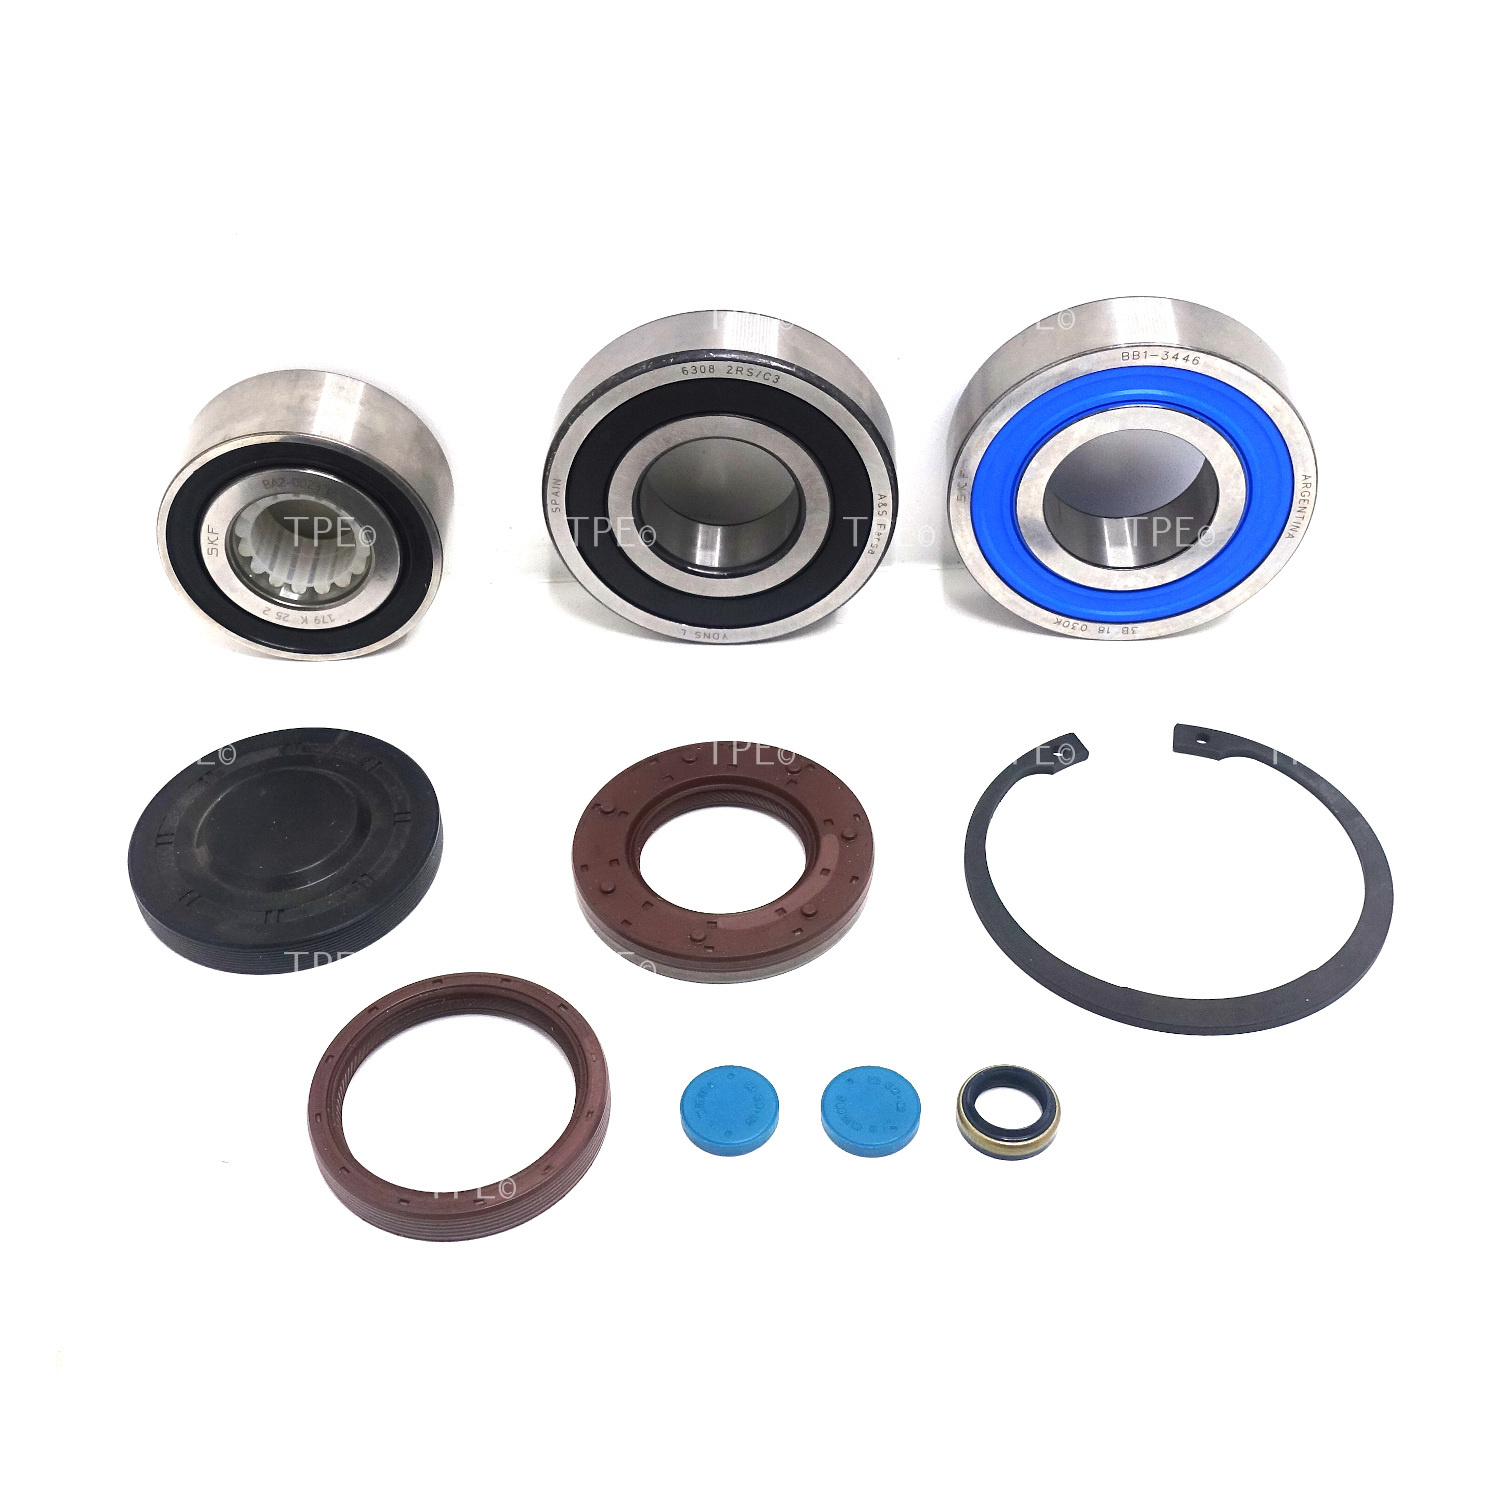 BMW.KB.06 This Bearing & Seal Kit contains the following Parts:

• 3 Bearings
• 3 Seals
• 3 Caps